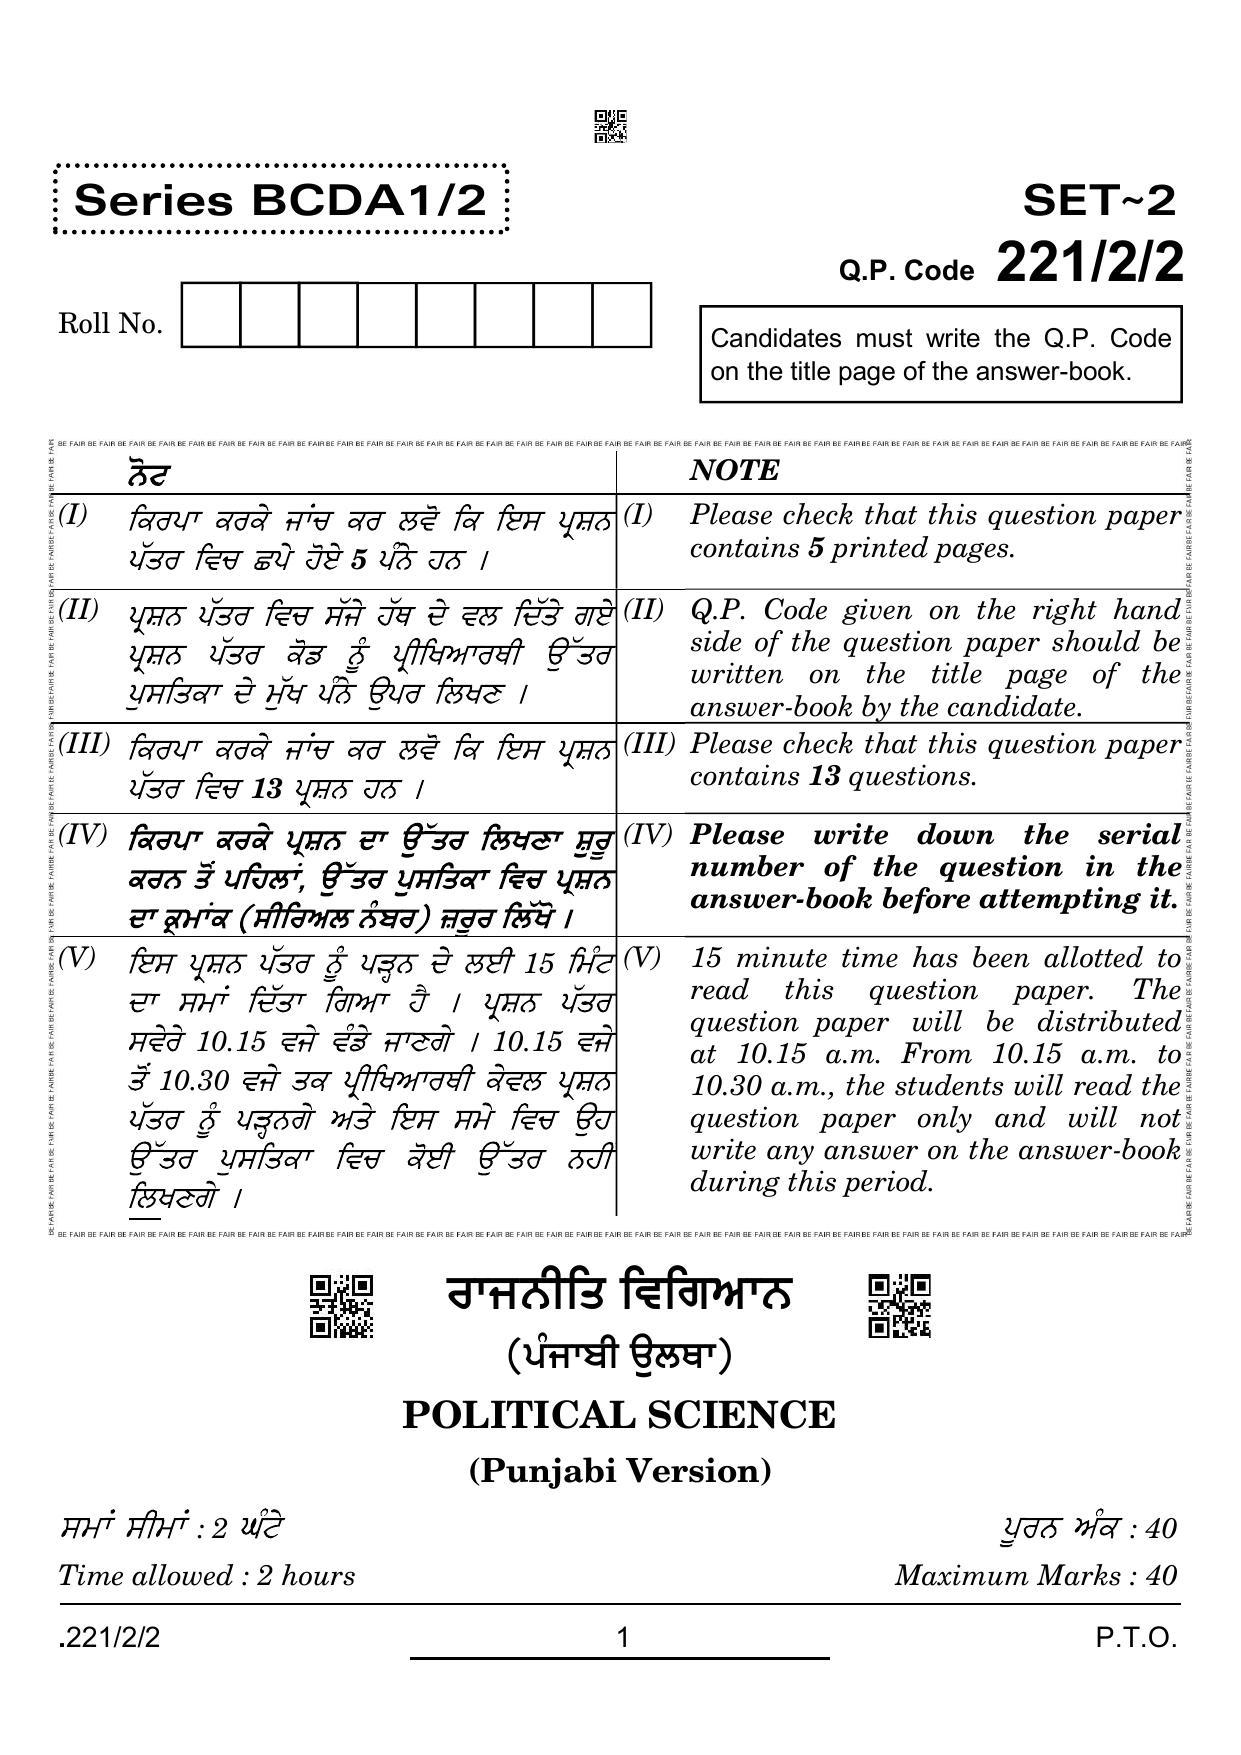 CBSE Class 12 221-2-2 Political Science Punjabi Version 2022 Question Paper - Page 1